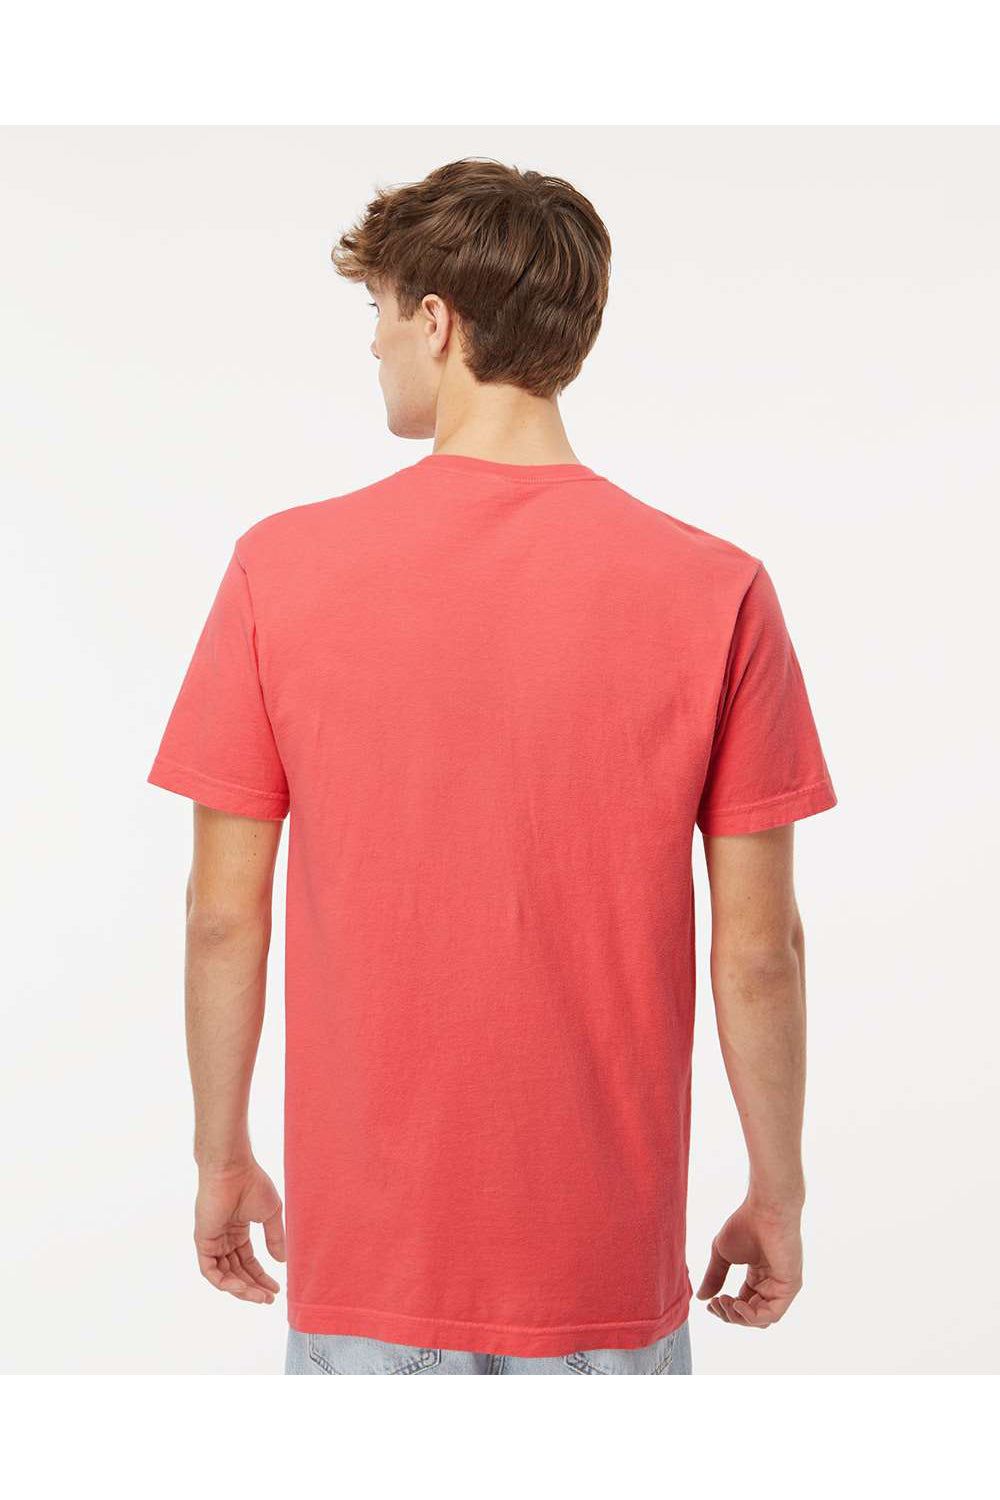 M&O 6500M Mens Vintage Garment Dyed Short Sleeve Crewneck T-Shirt Bright Salmon Model Back